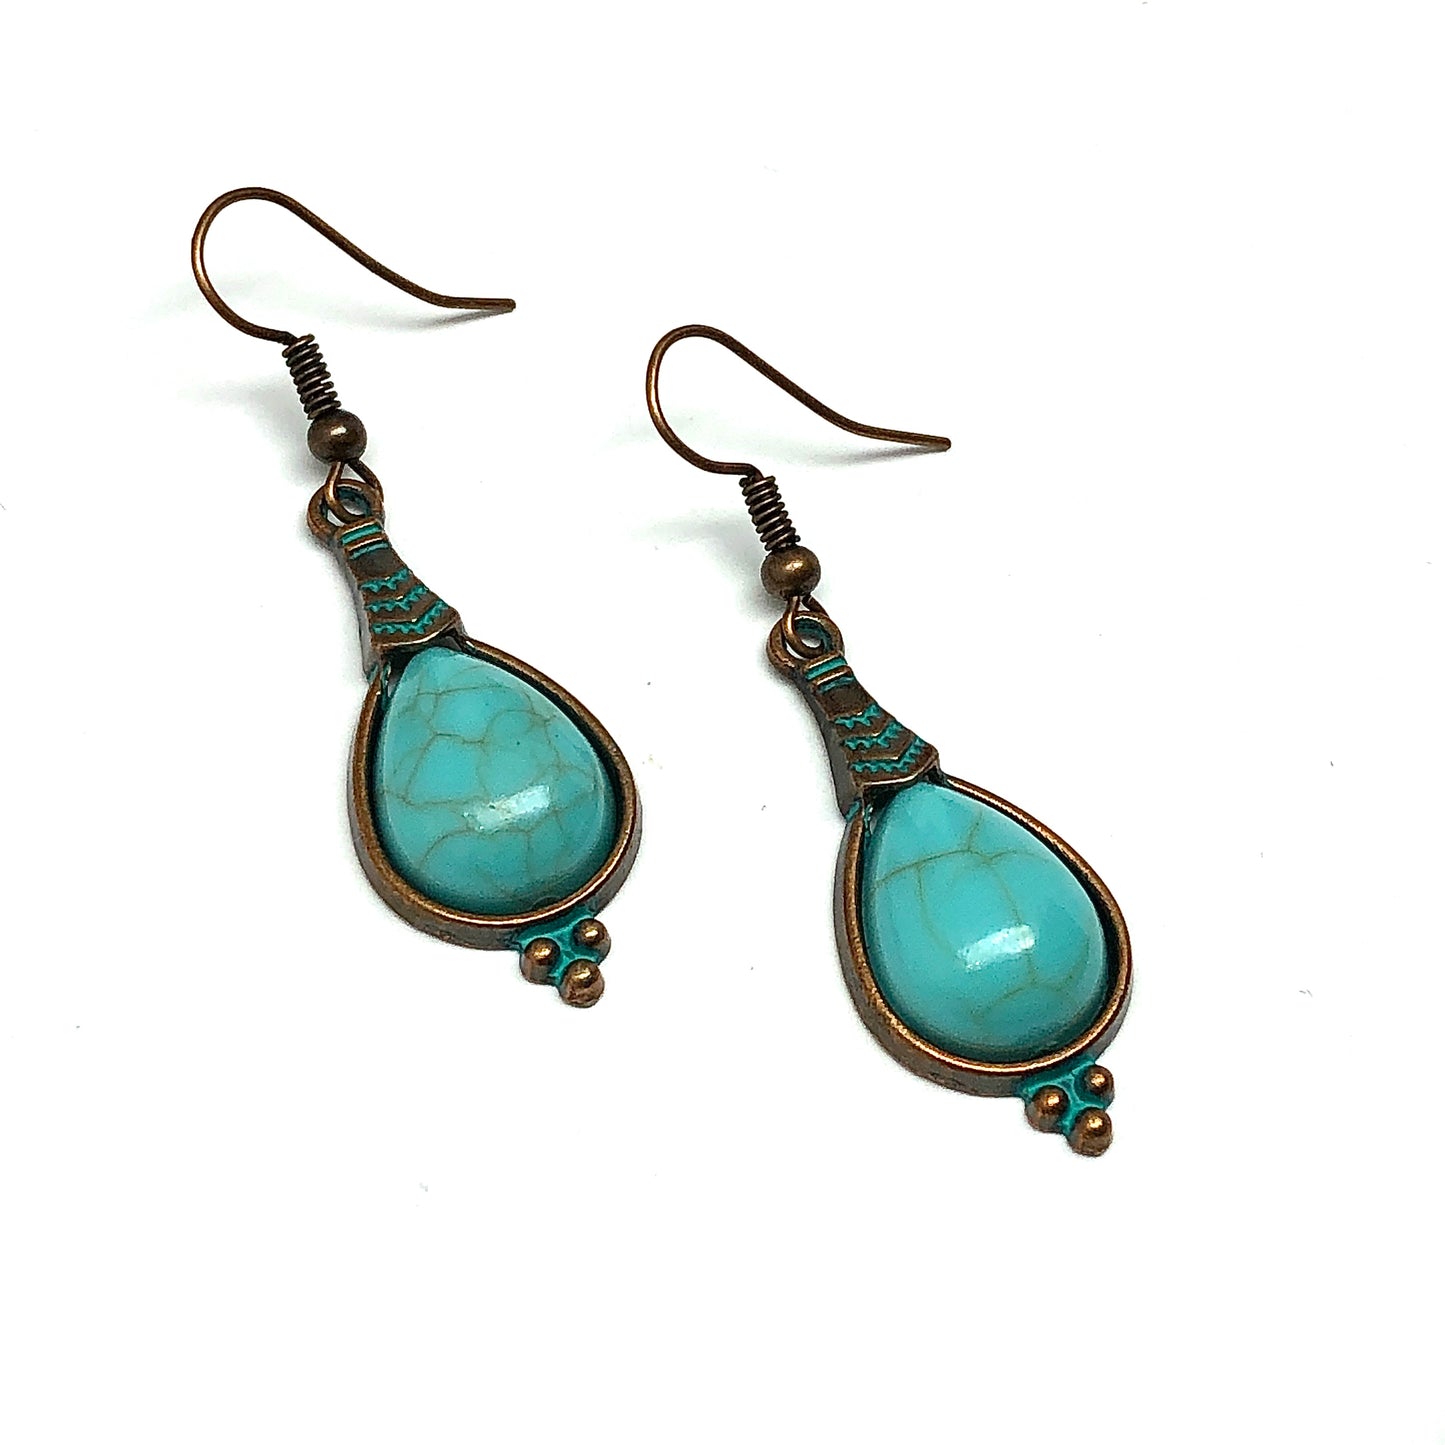 Rustic Bronzed Baby Blue Turquoise Teardrop Earrings | Boho Style Jewelry at Blingschlingers